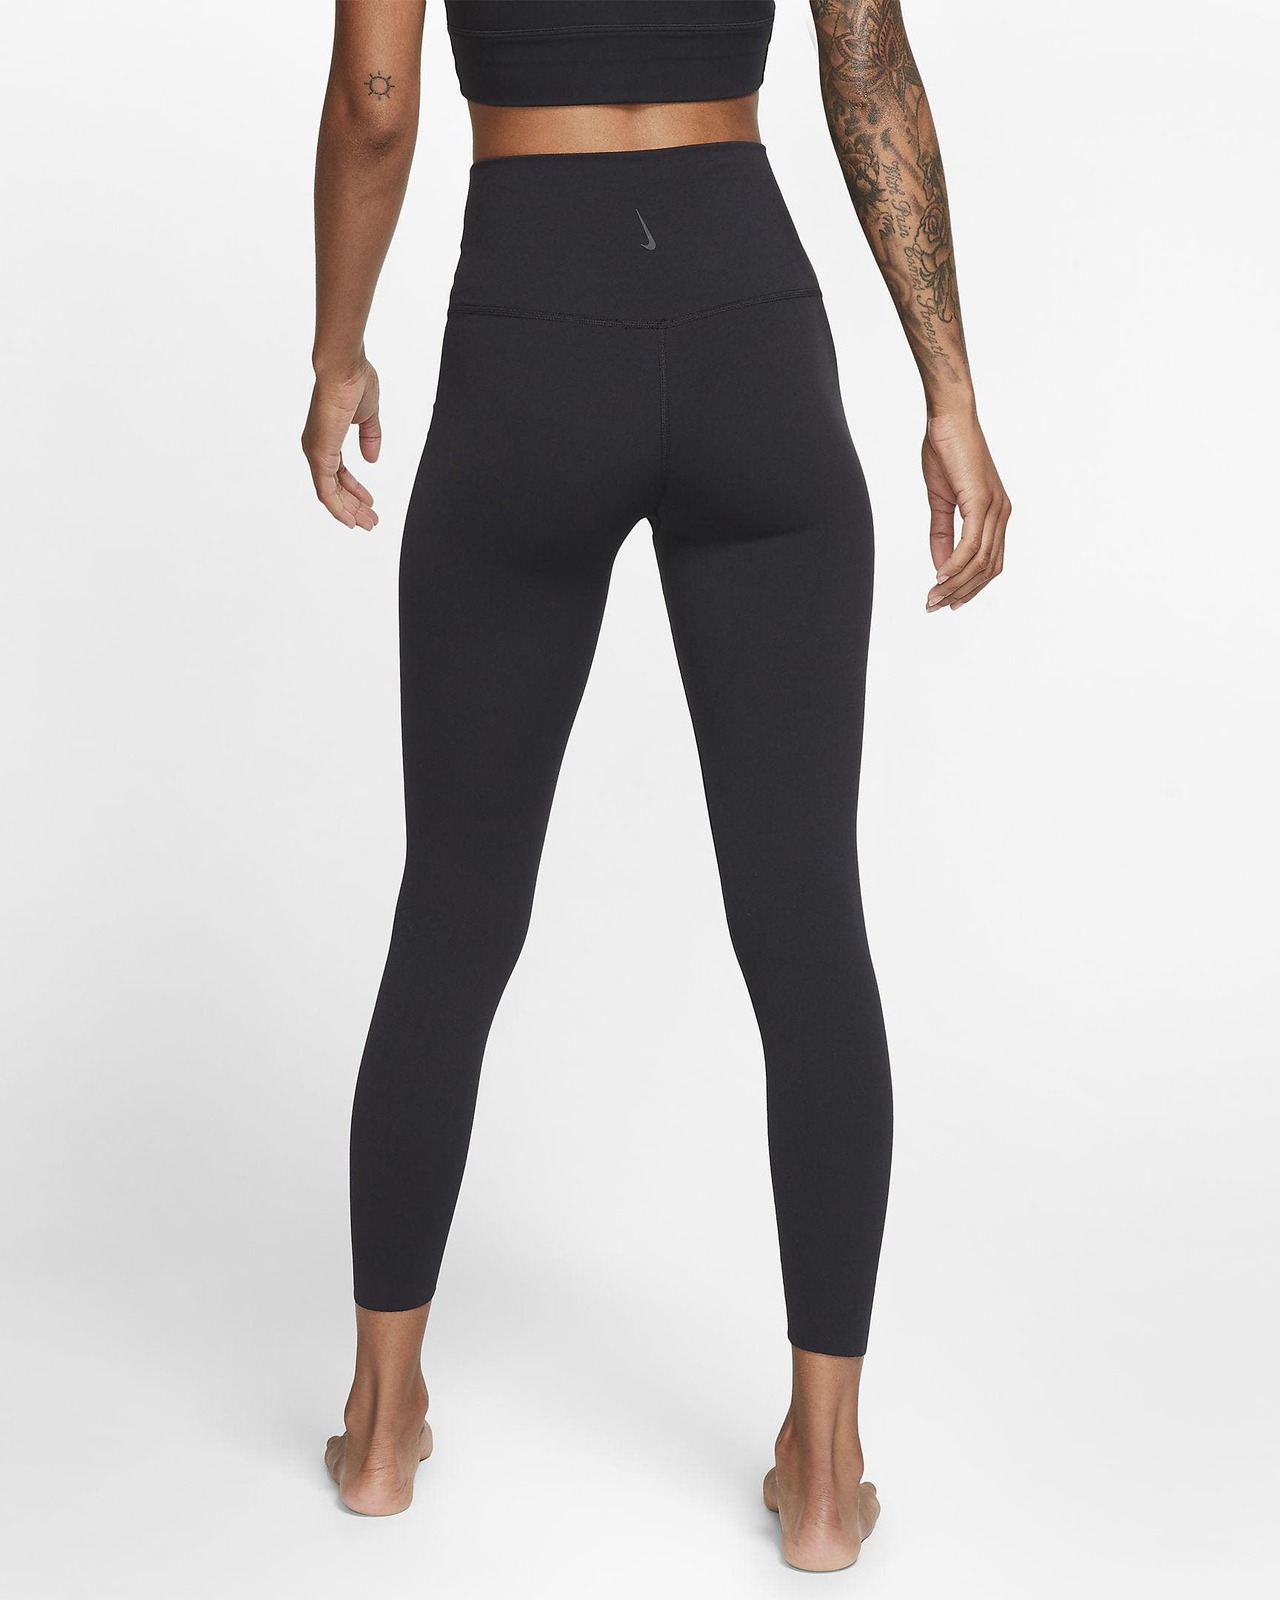 Nike Women's The Nike Yoga Luxe 7/8 Tight (Black/Sail, Size XL US)